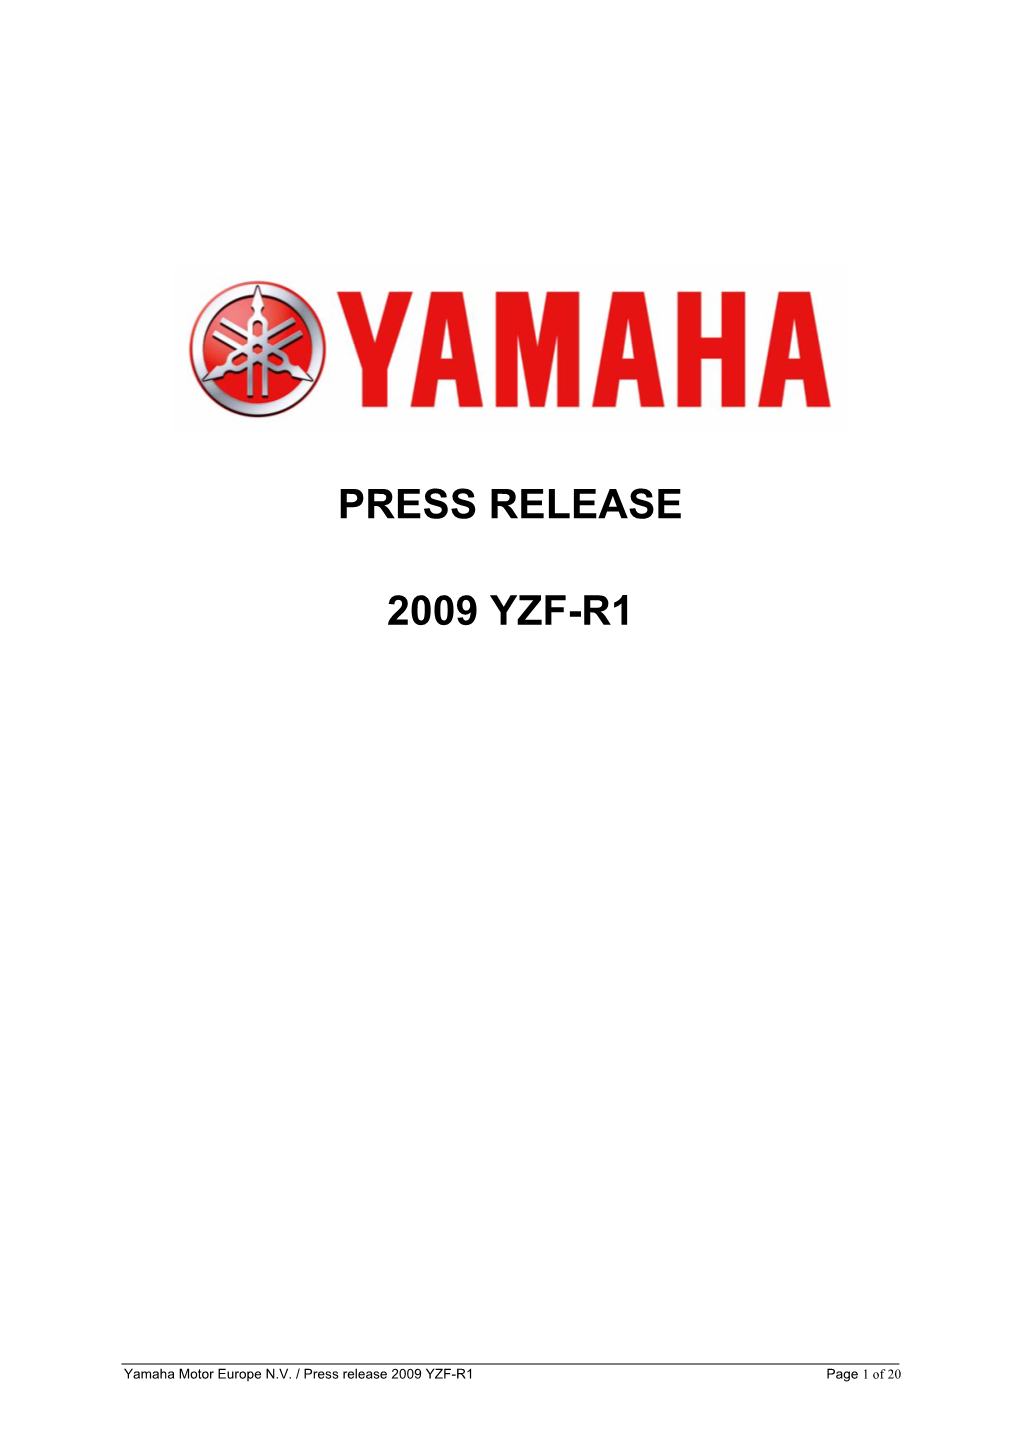 Press Release 2009 Yzf-R1